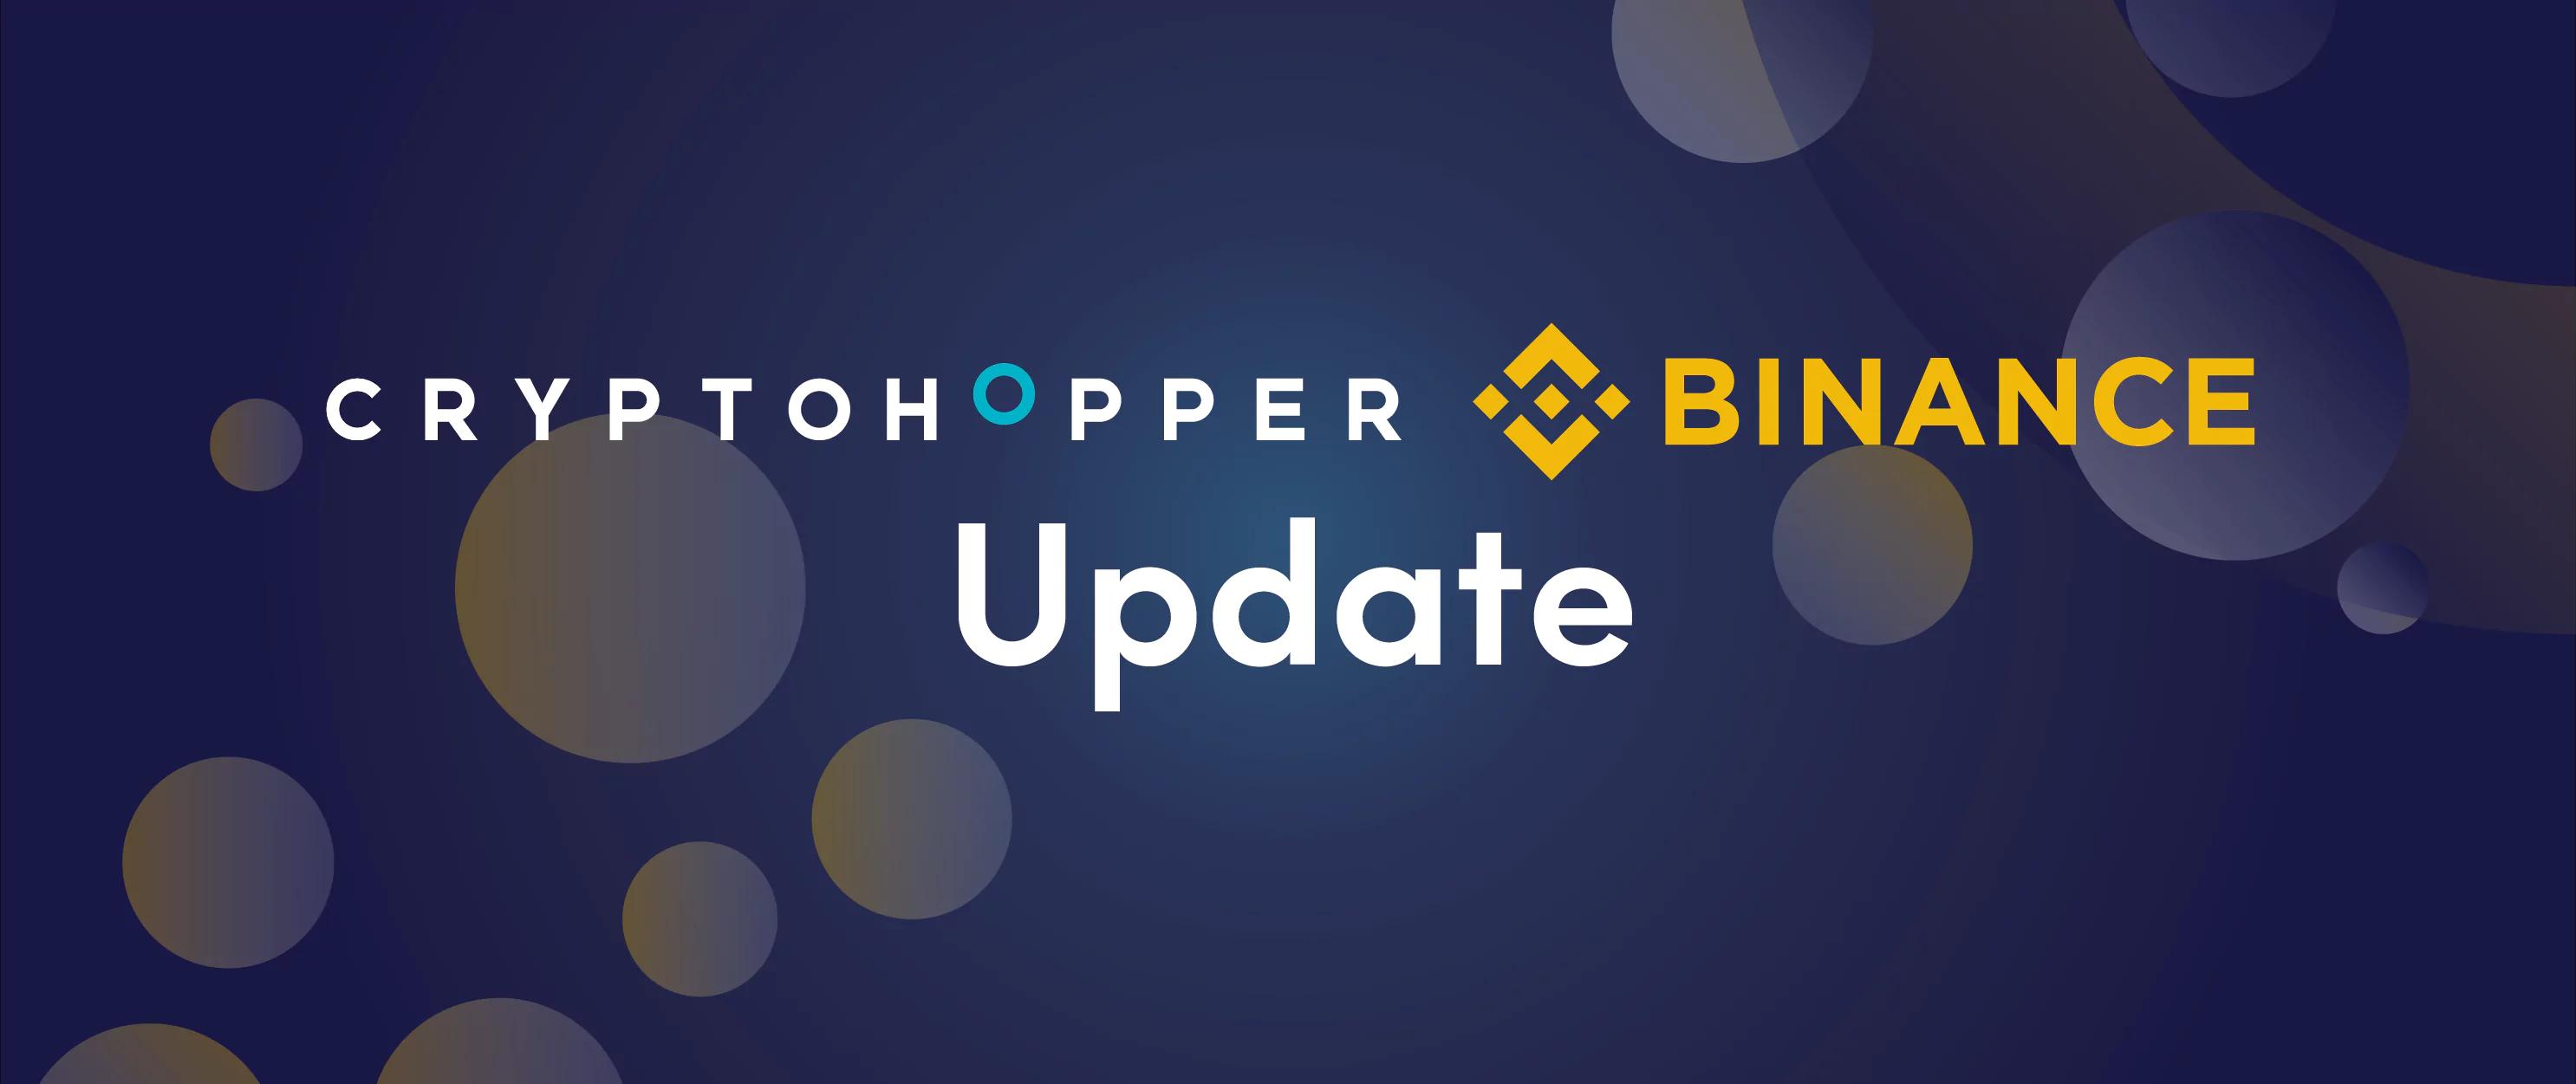 Binance exchange added to Cryptohopper